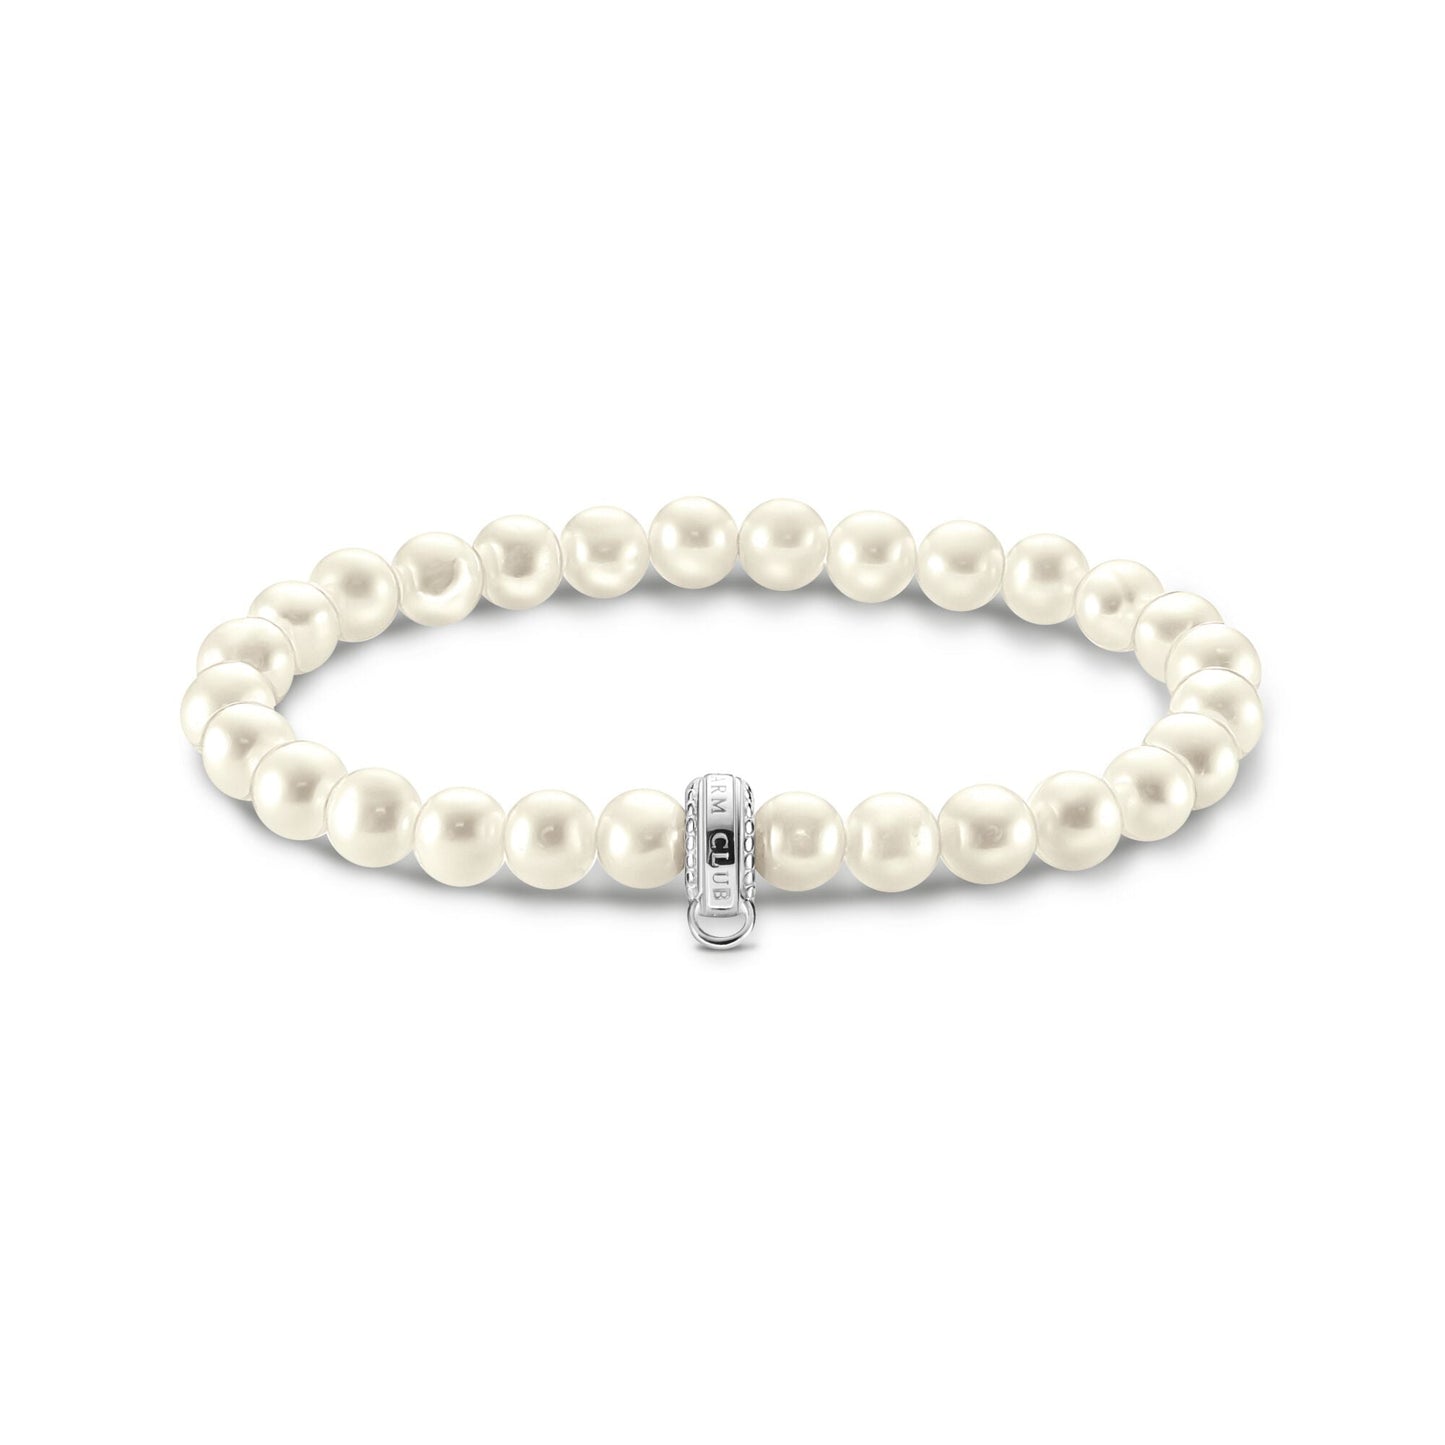 THOMAS SABO Charm bracelet pearls silver